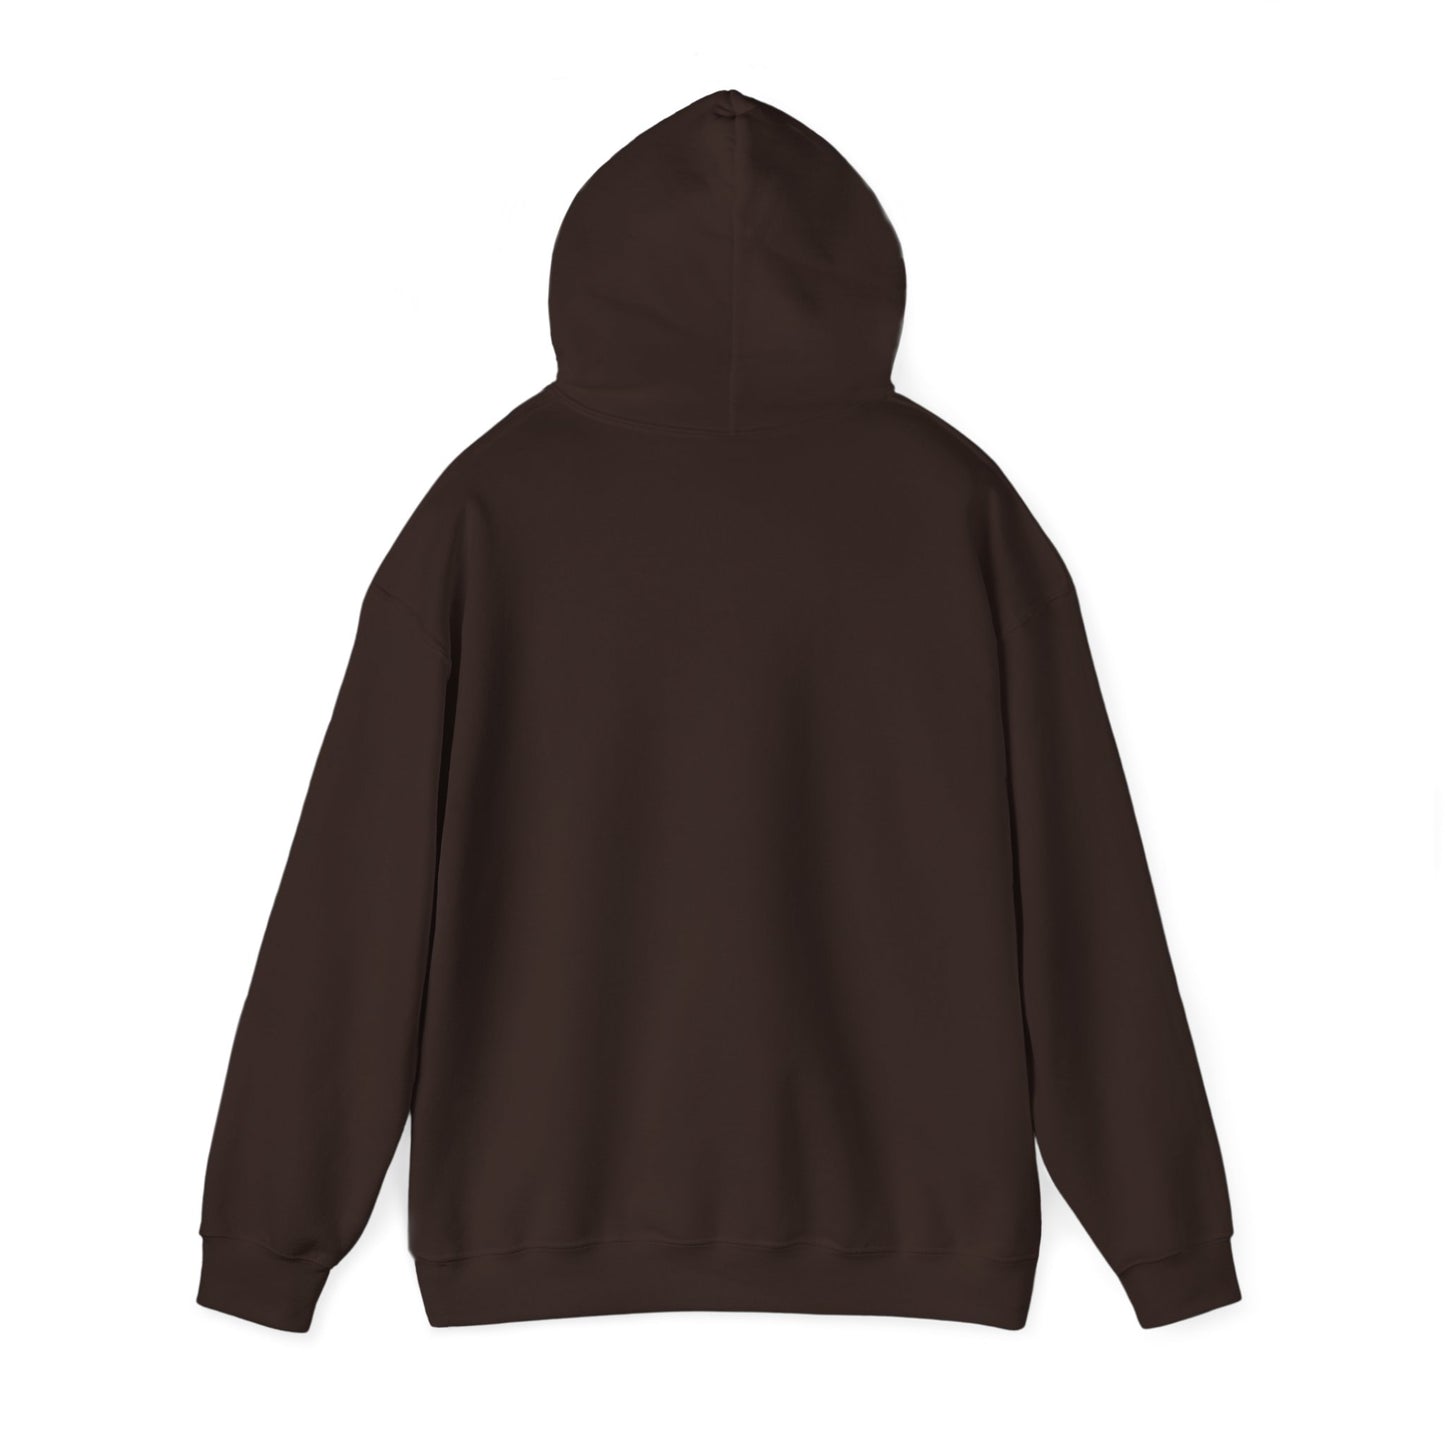 Maryland Unisex Heavy Blend™ Hooded Sweatshirt, Men and women Hoodie (Visions & Possibilities)